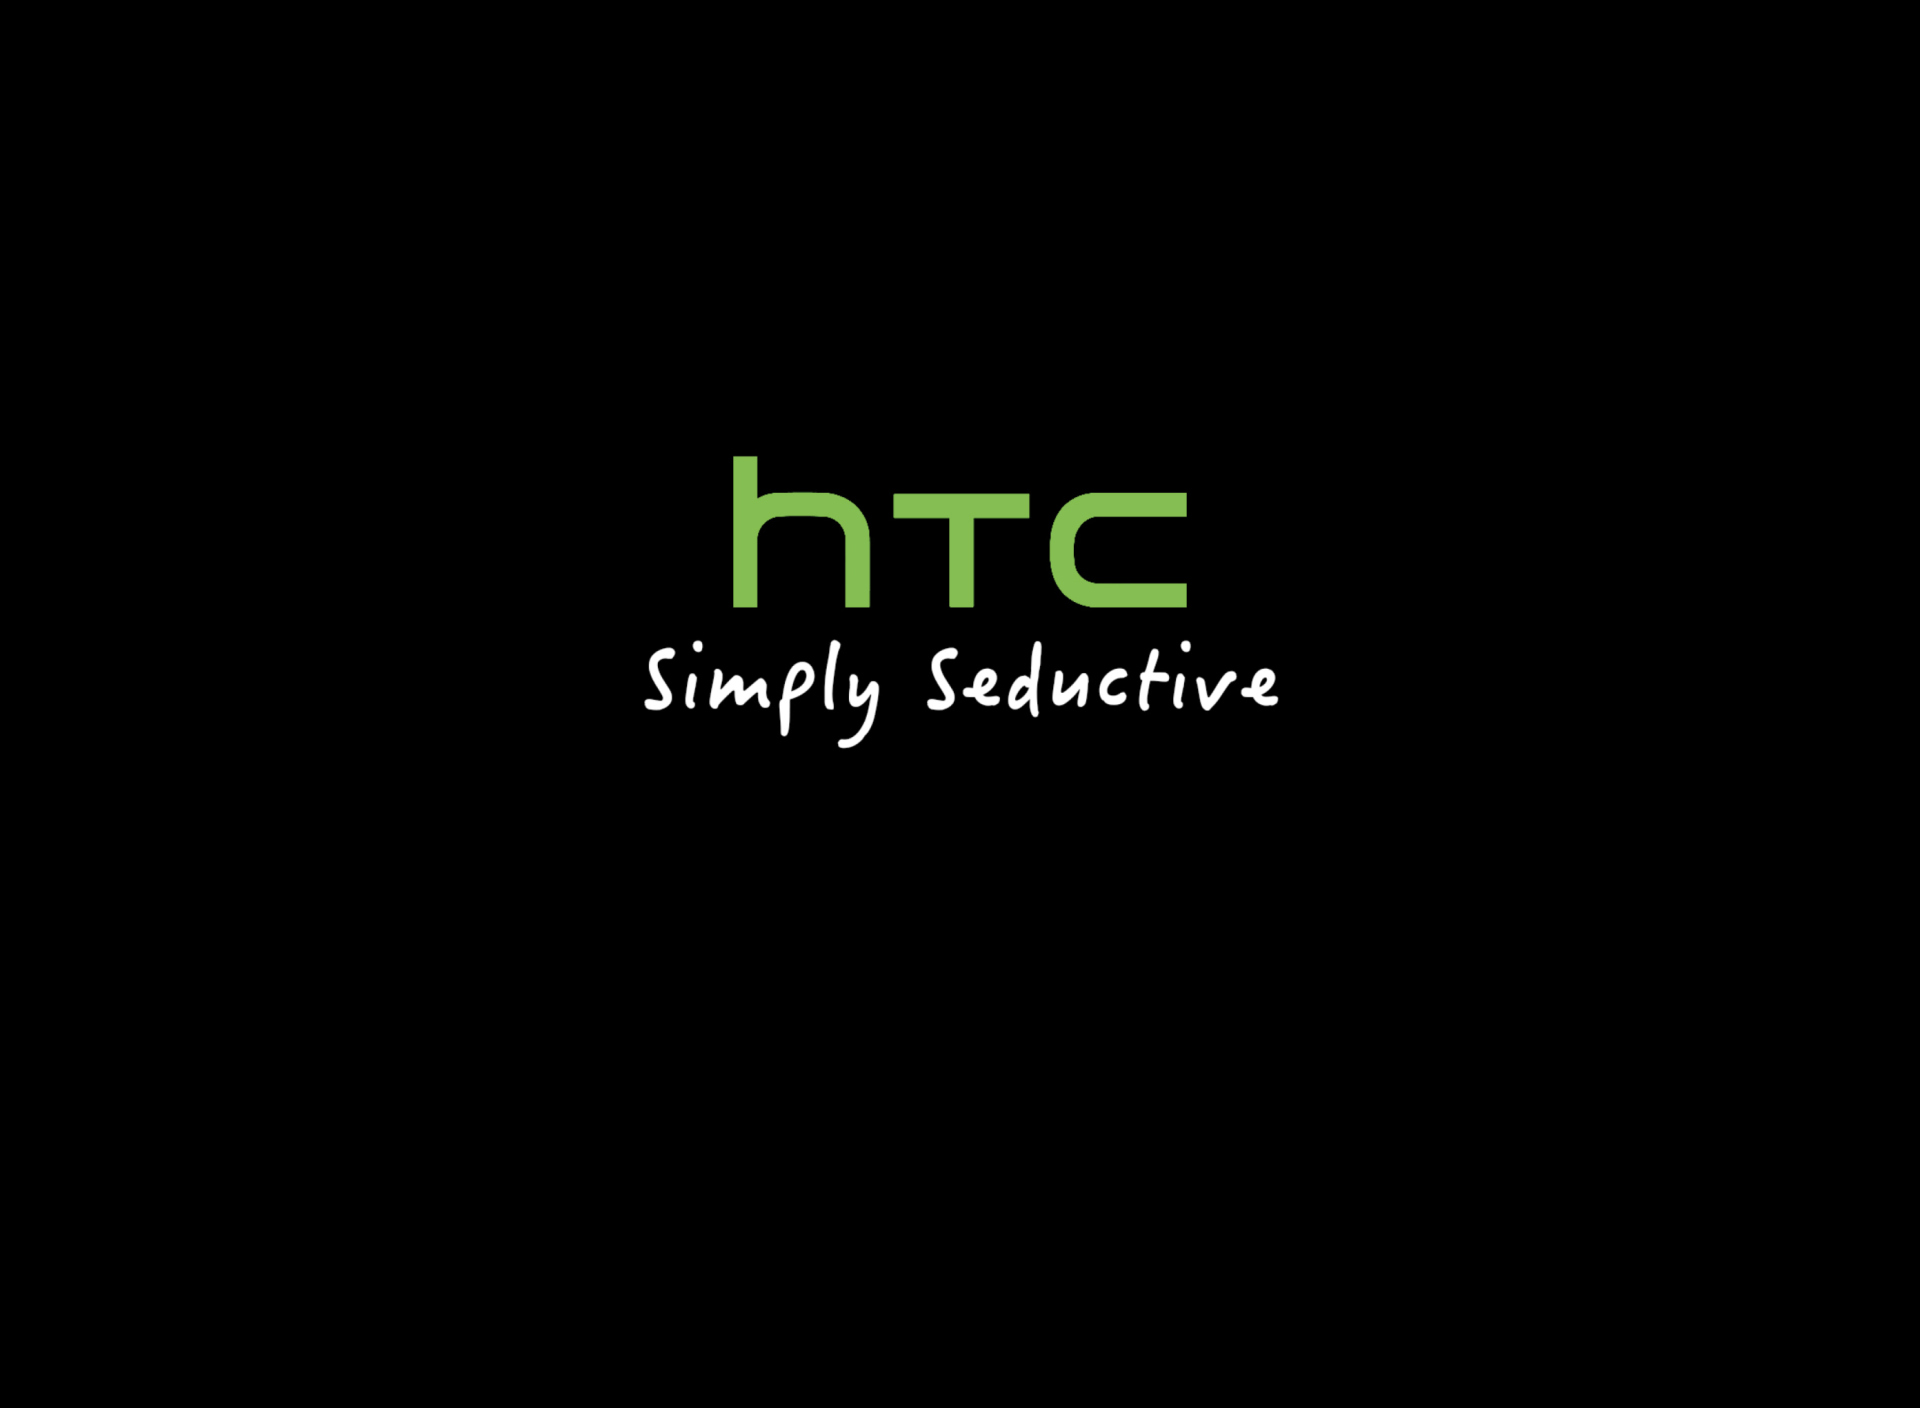 HTC - Simply Seductive wallpaper 1920x1408